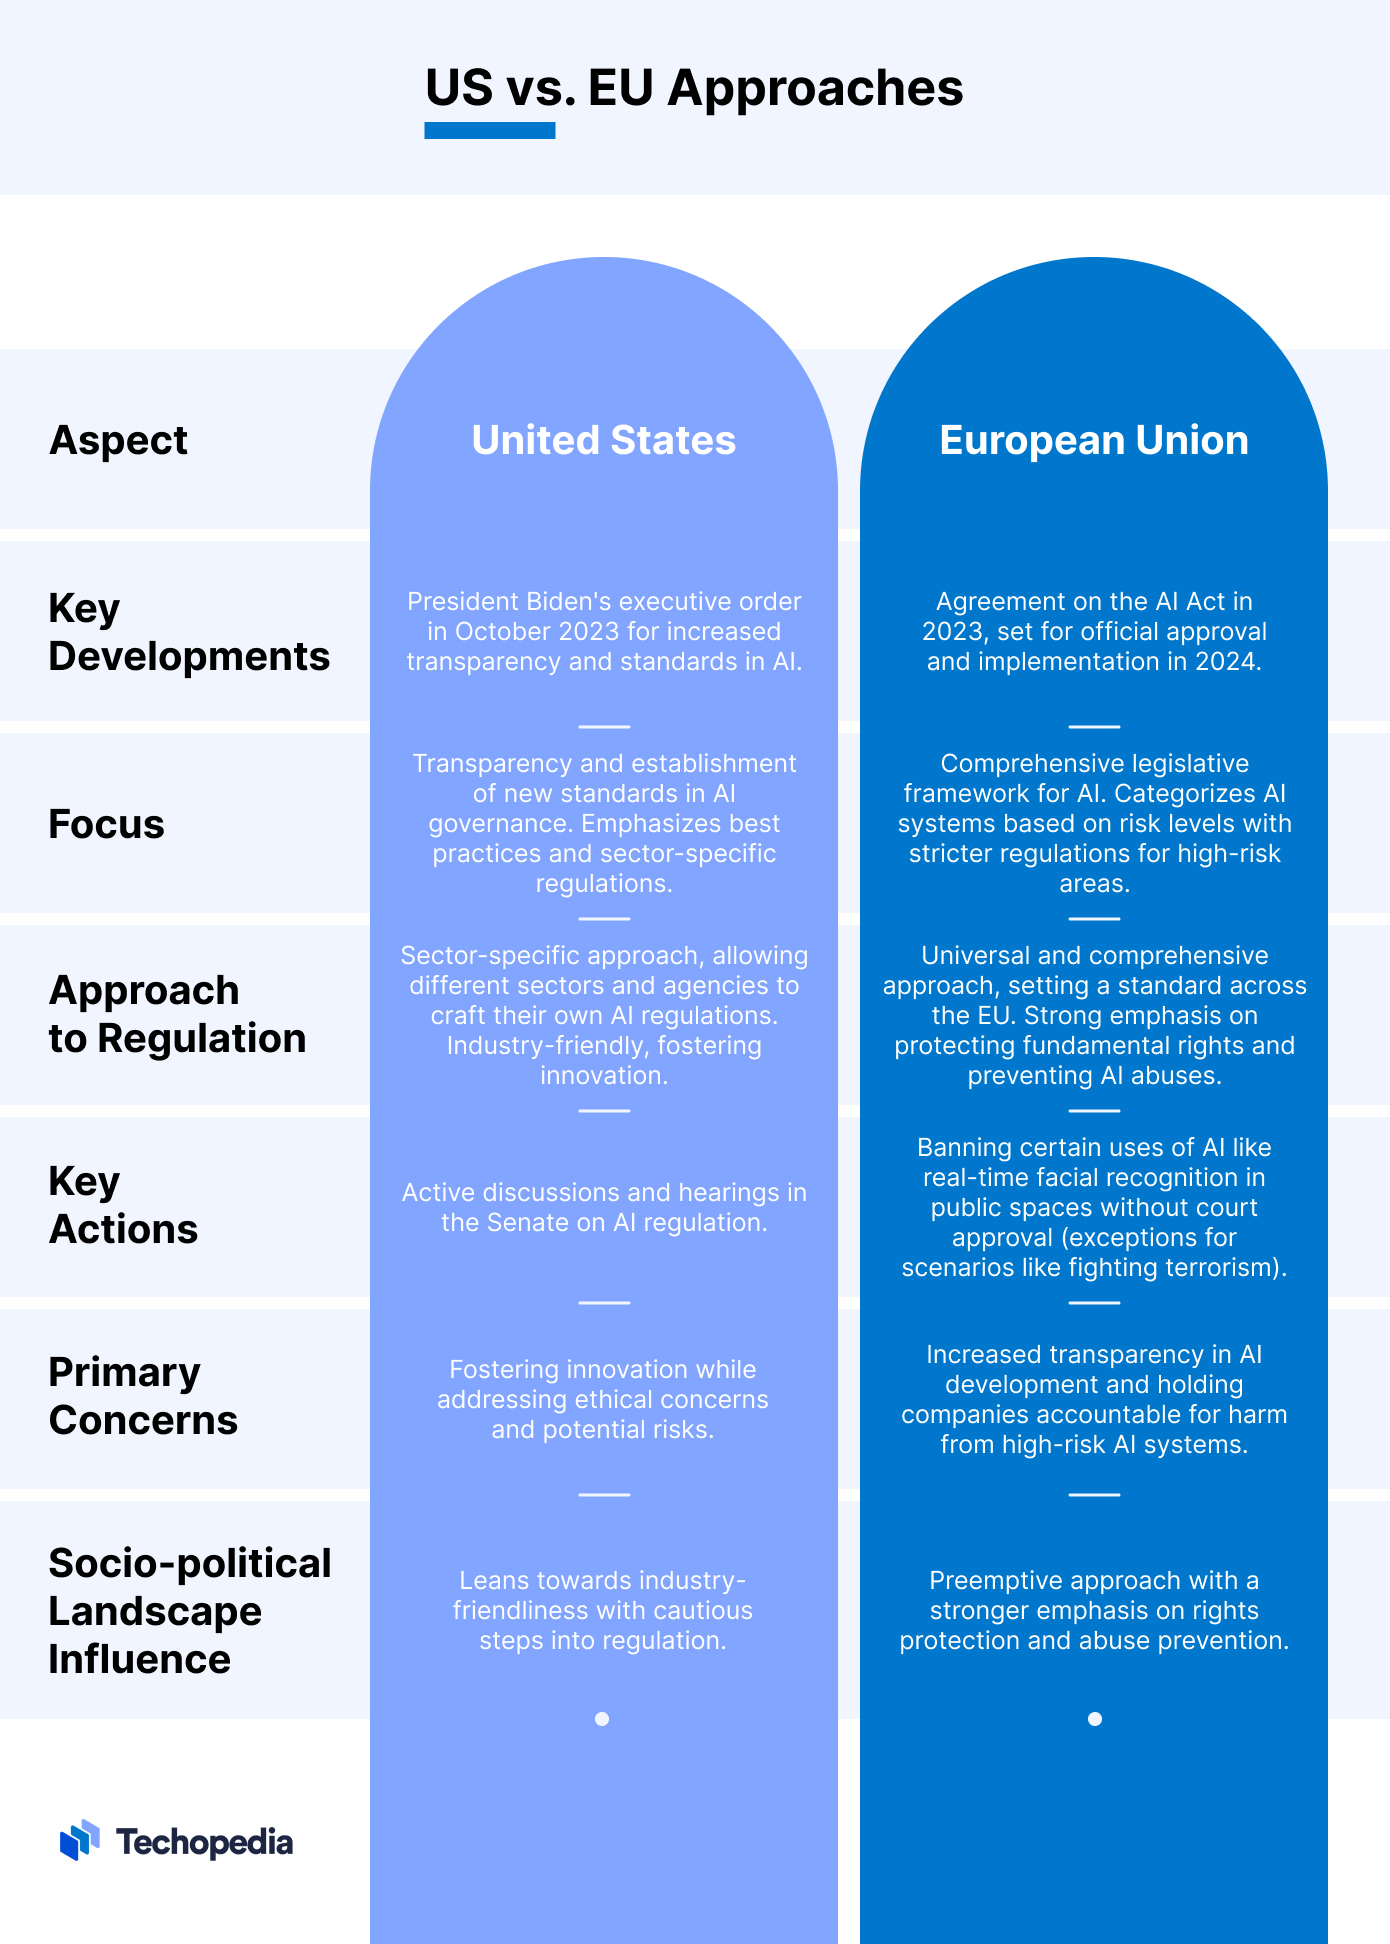 US vs. EU Approaches to AI Regulation